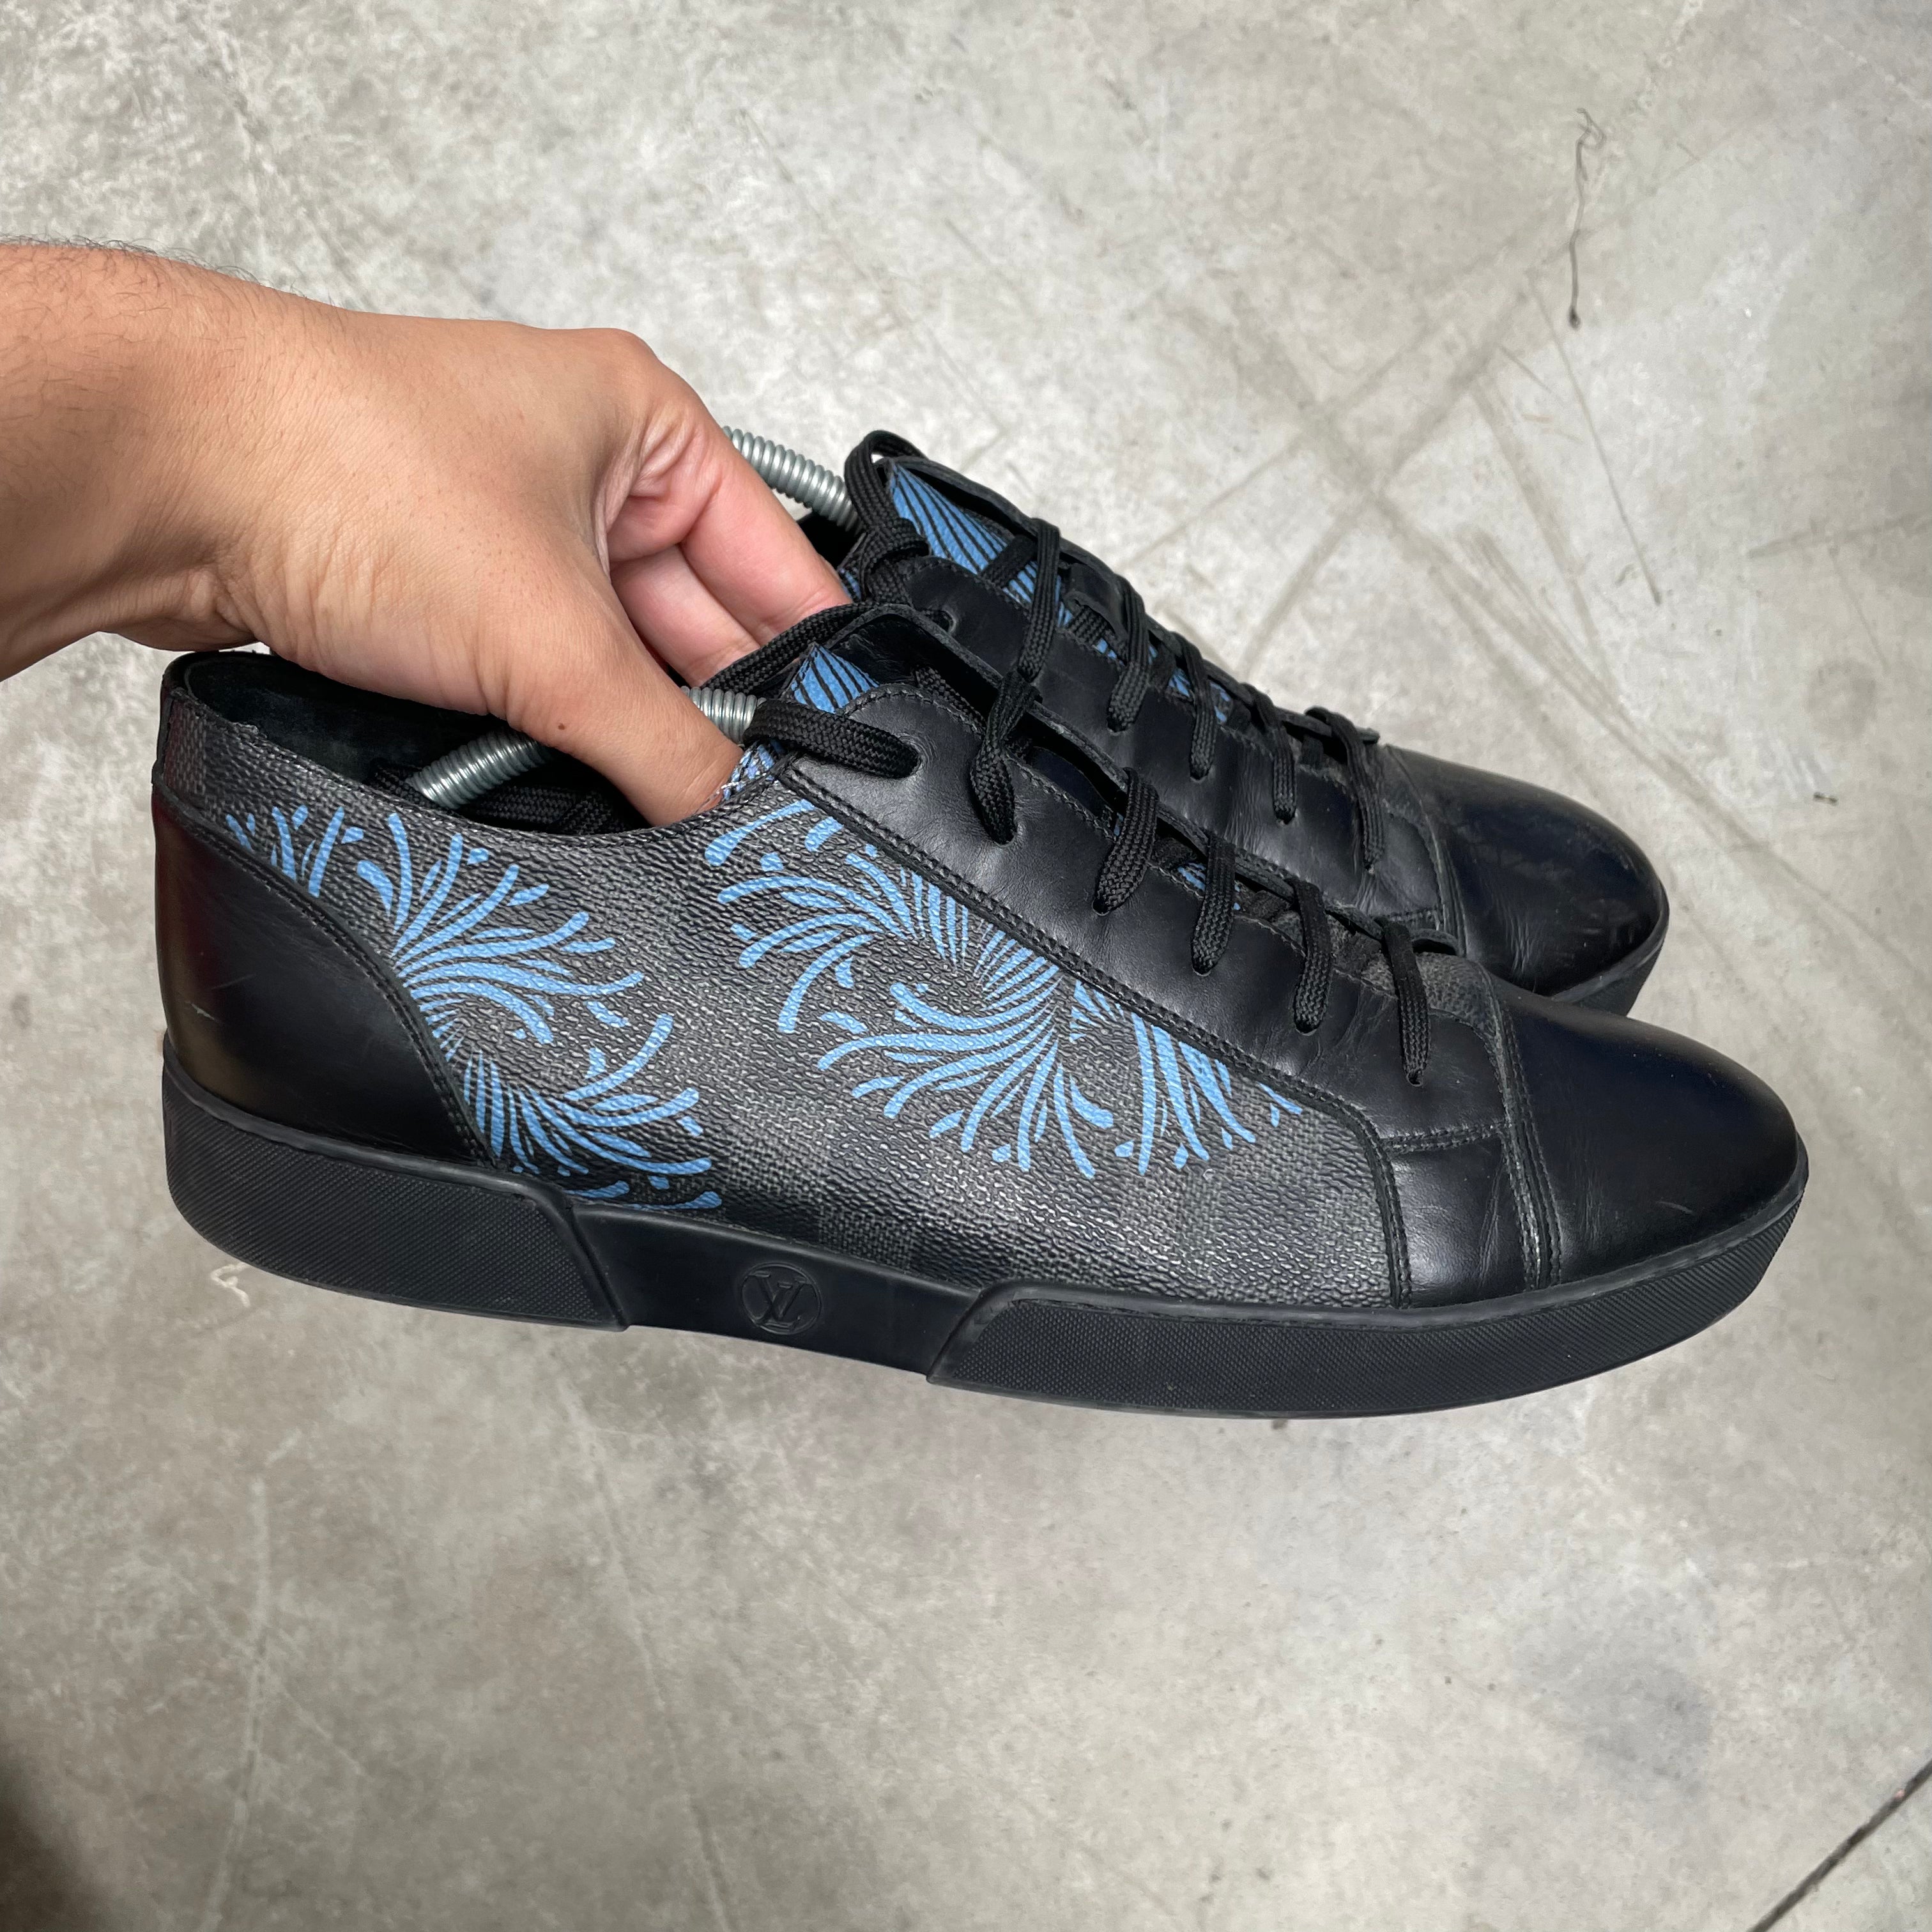 Louis Vuitton Christopher Nemeth Sneakers - Black Sneakers, Shoes